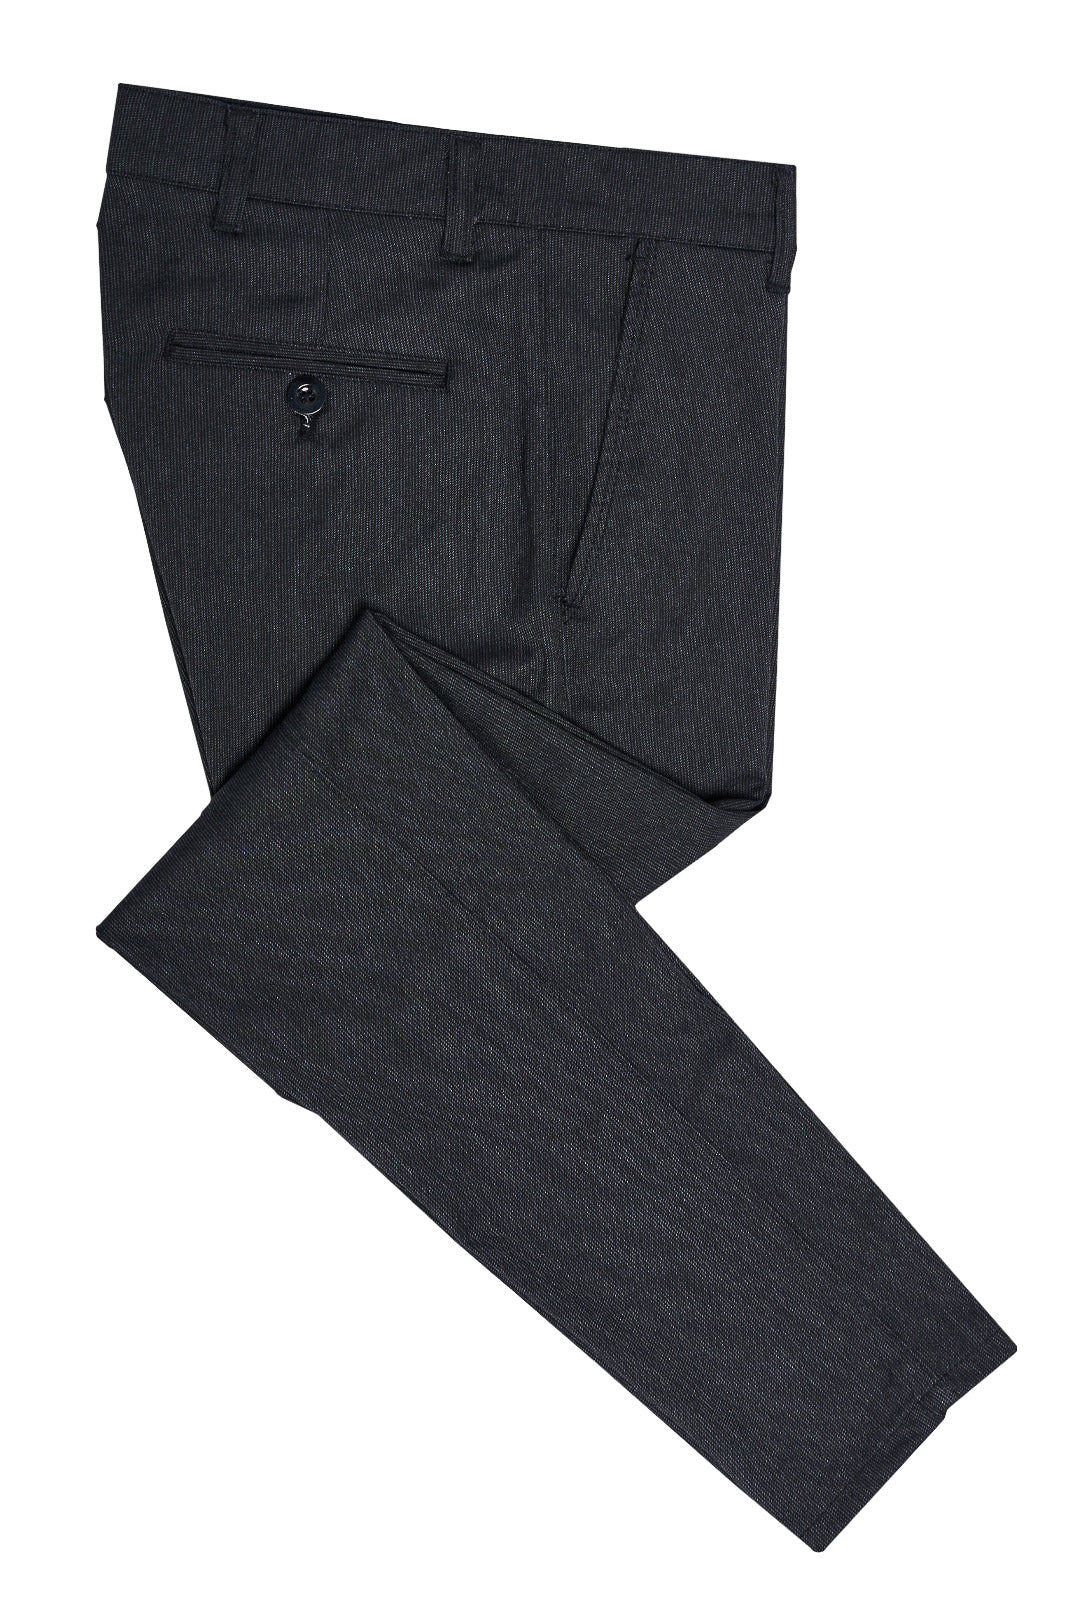 Textured Gray Pants